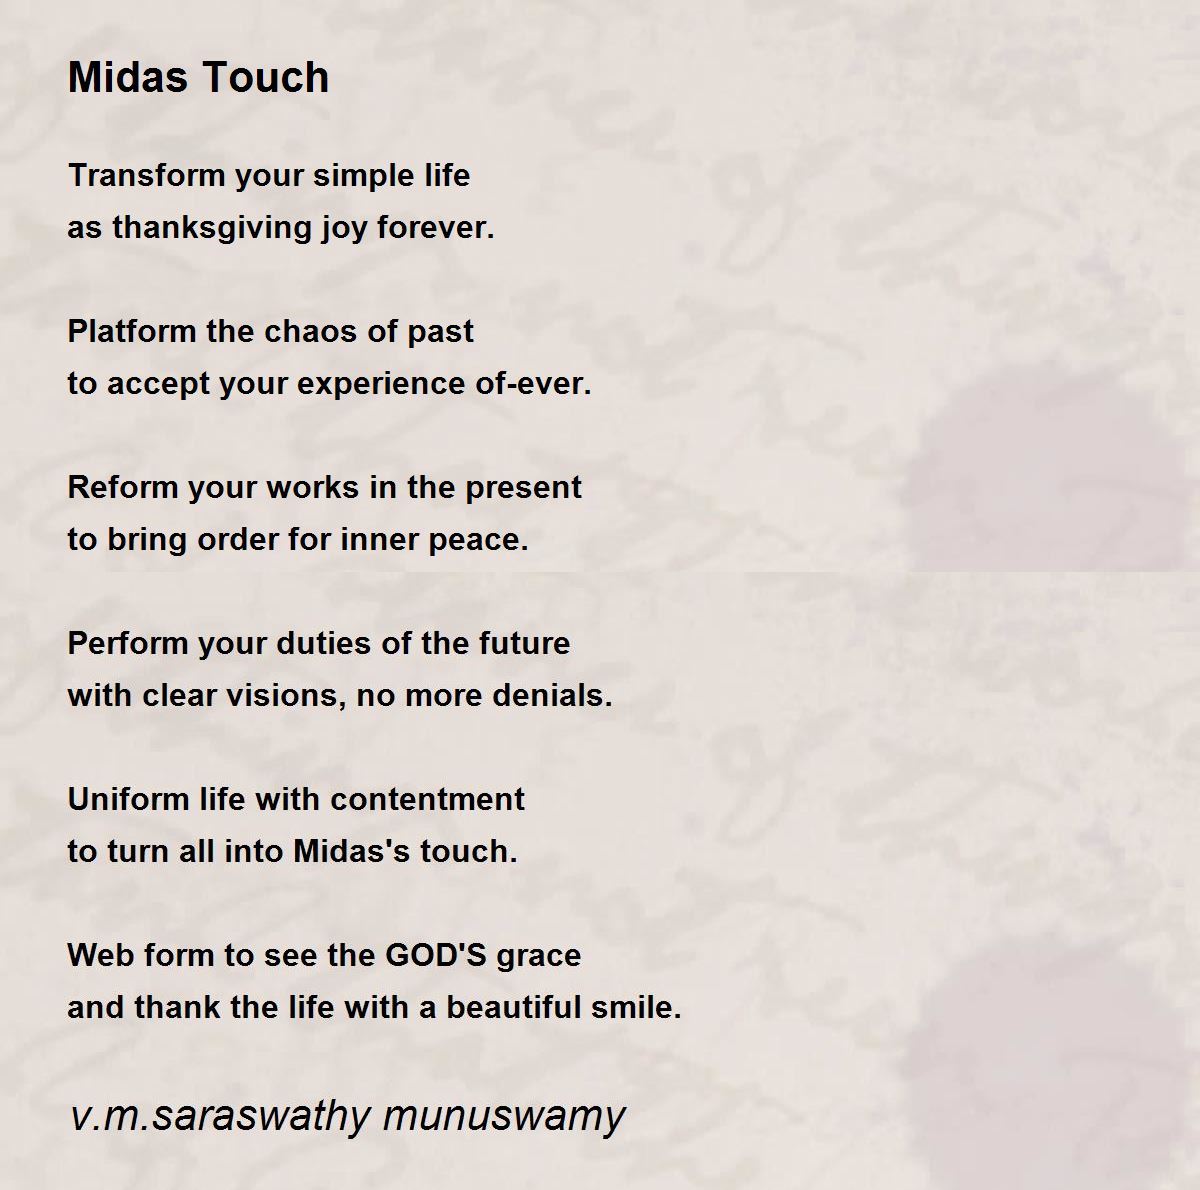 Midas' Touch - Midas' Touch Poem by Edward Kofi Louis